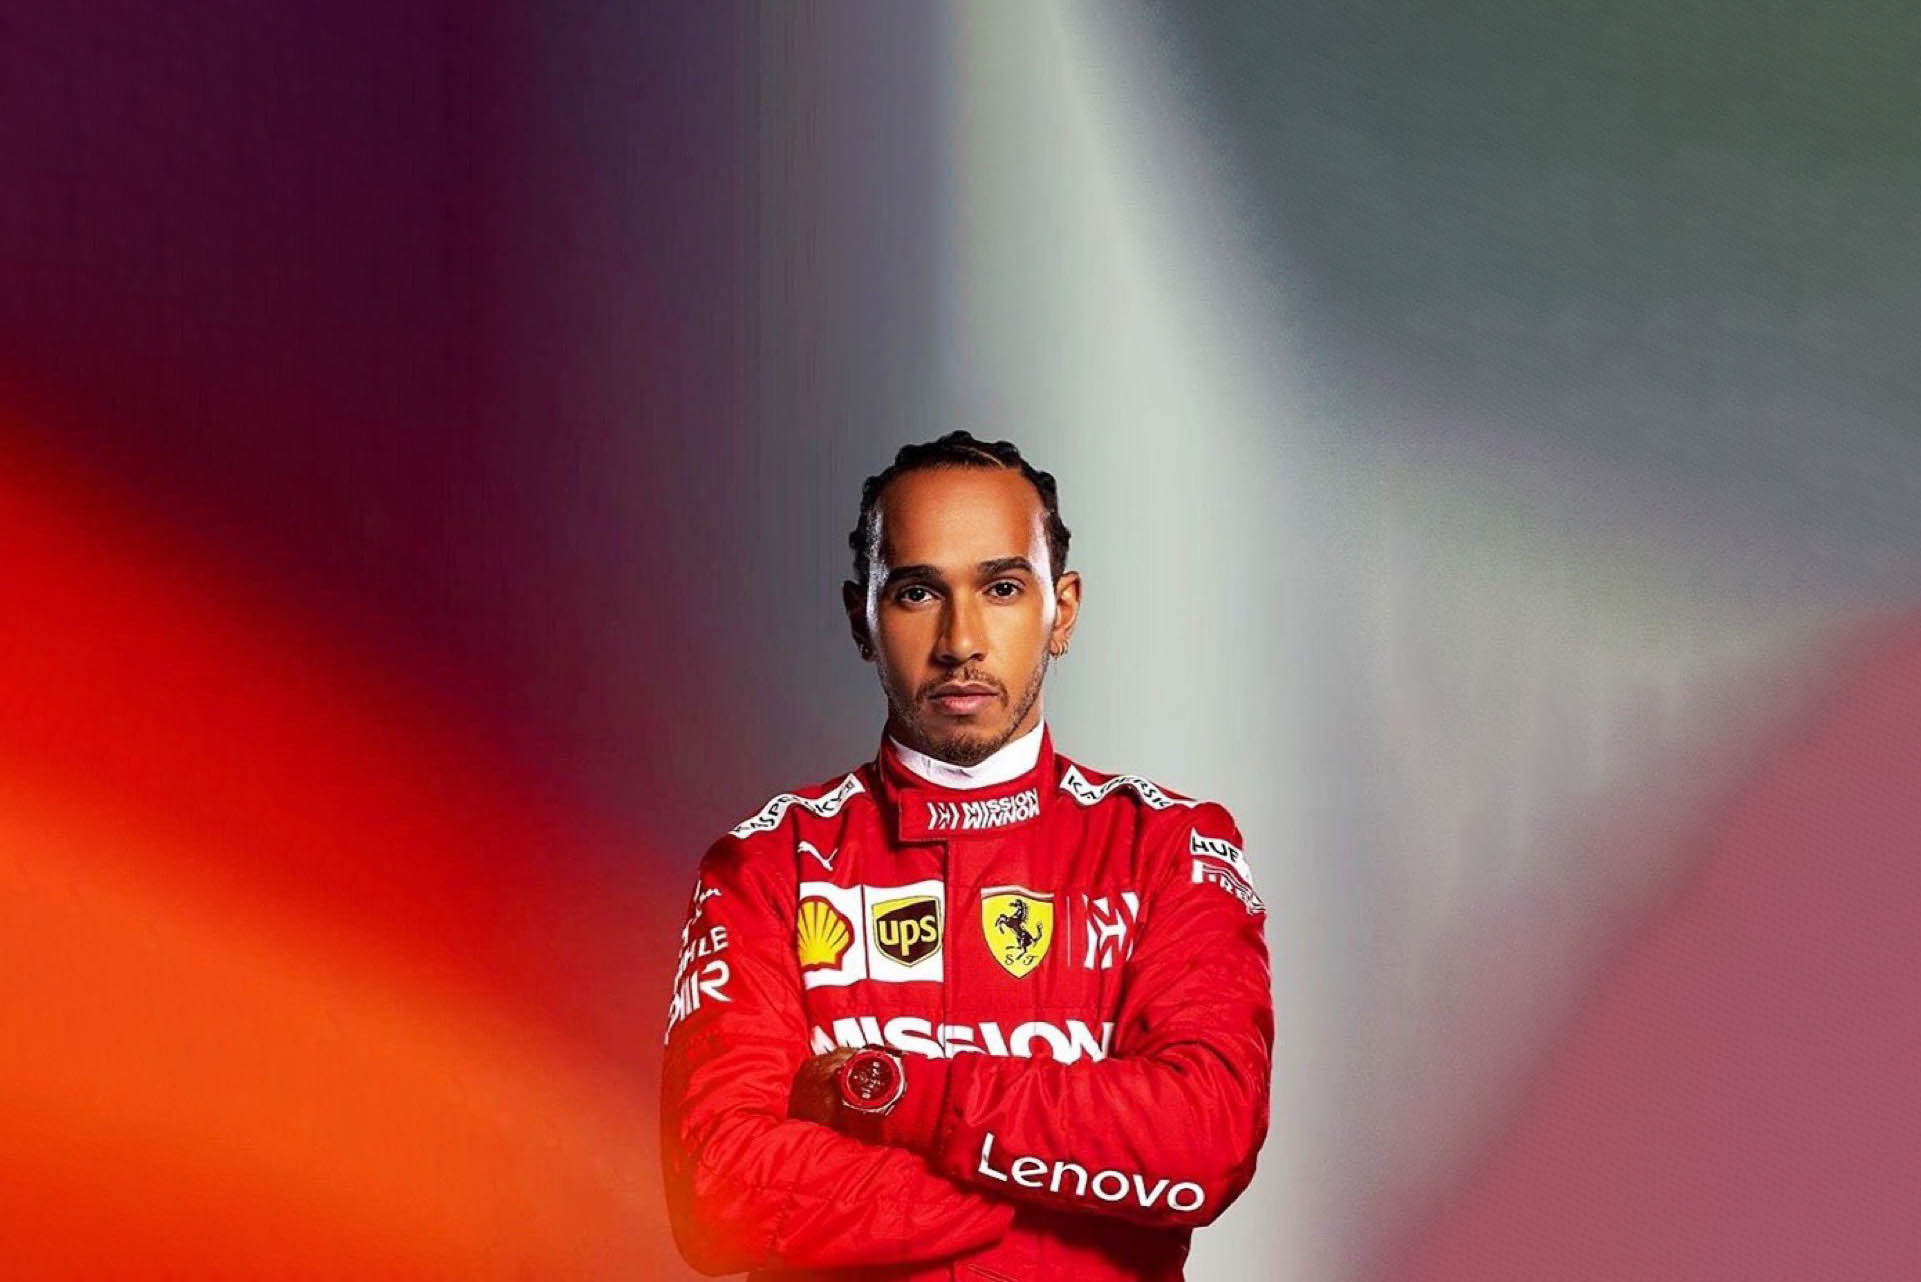 F1 - Lewis Hamilton